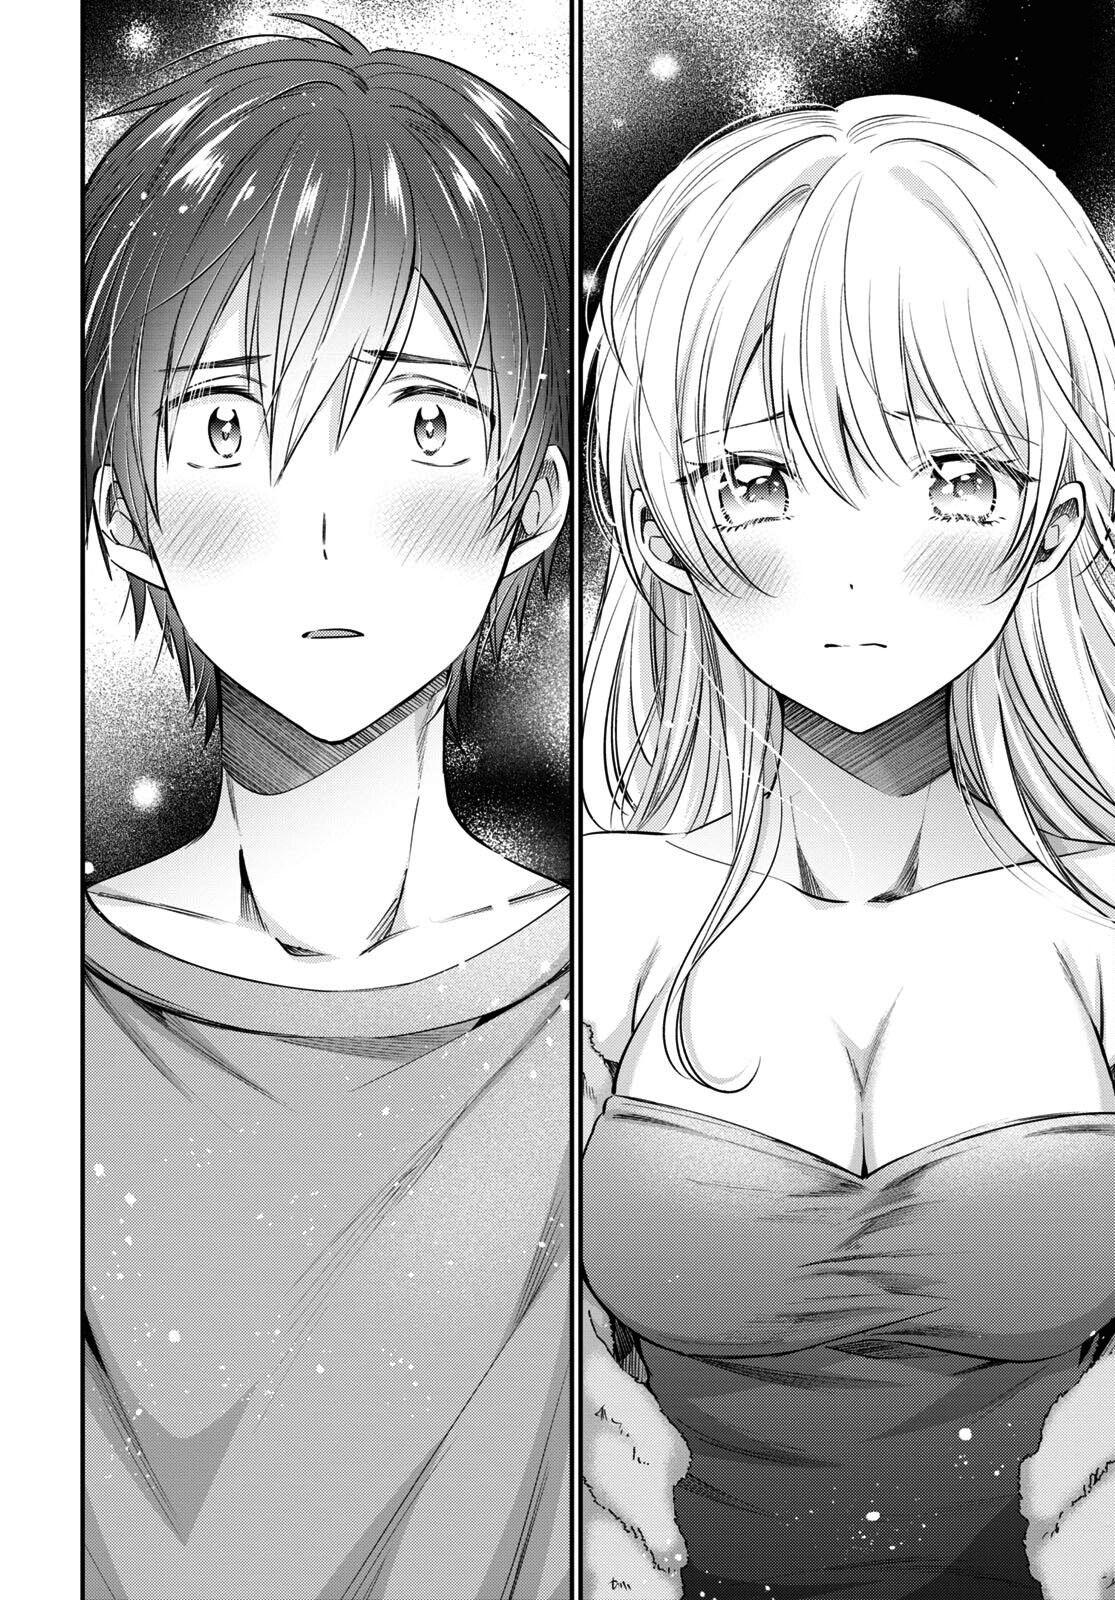 More than a married couple, but not lovers. (Fuufu Ijou, Koibito Miman.)  Manga